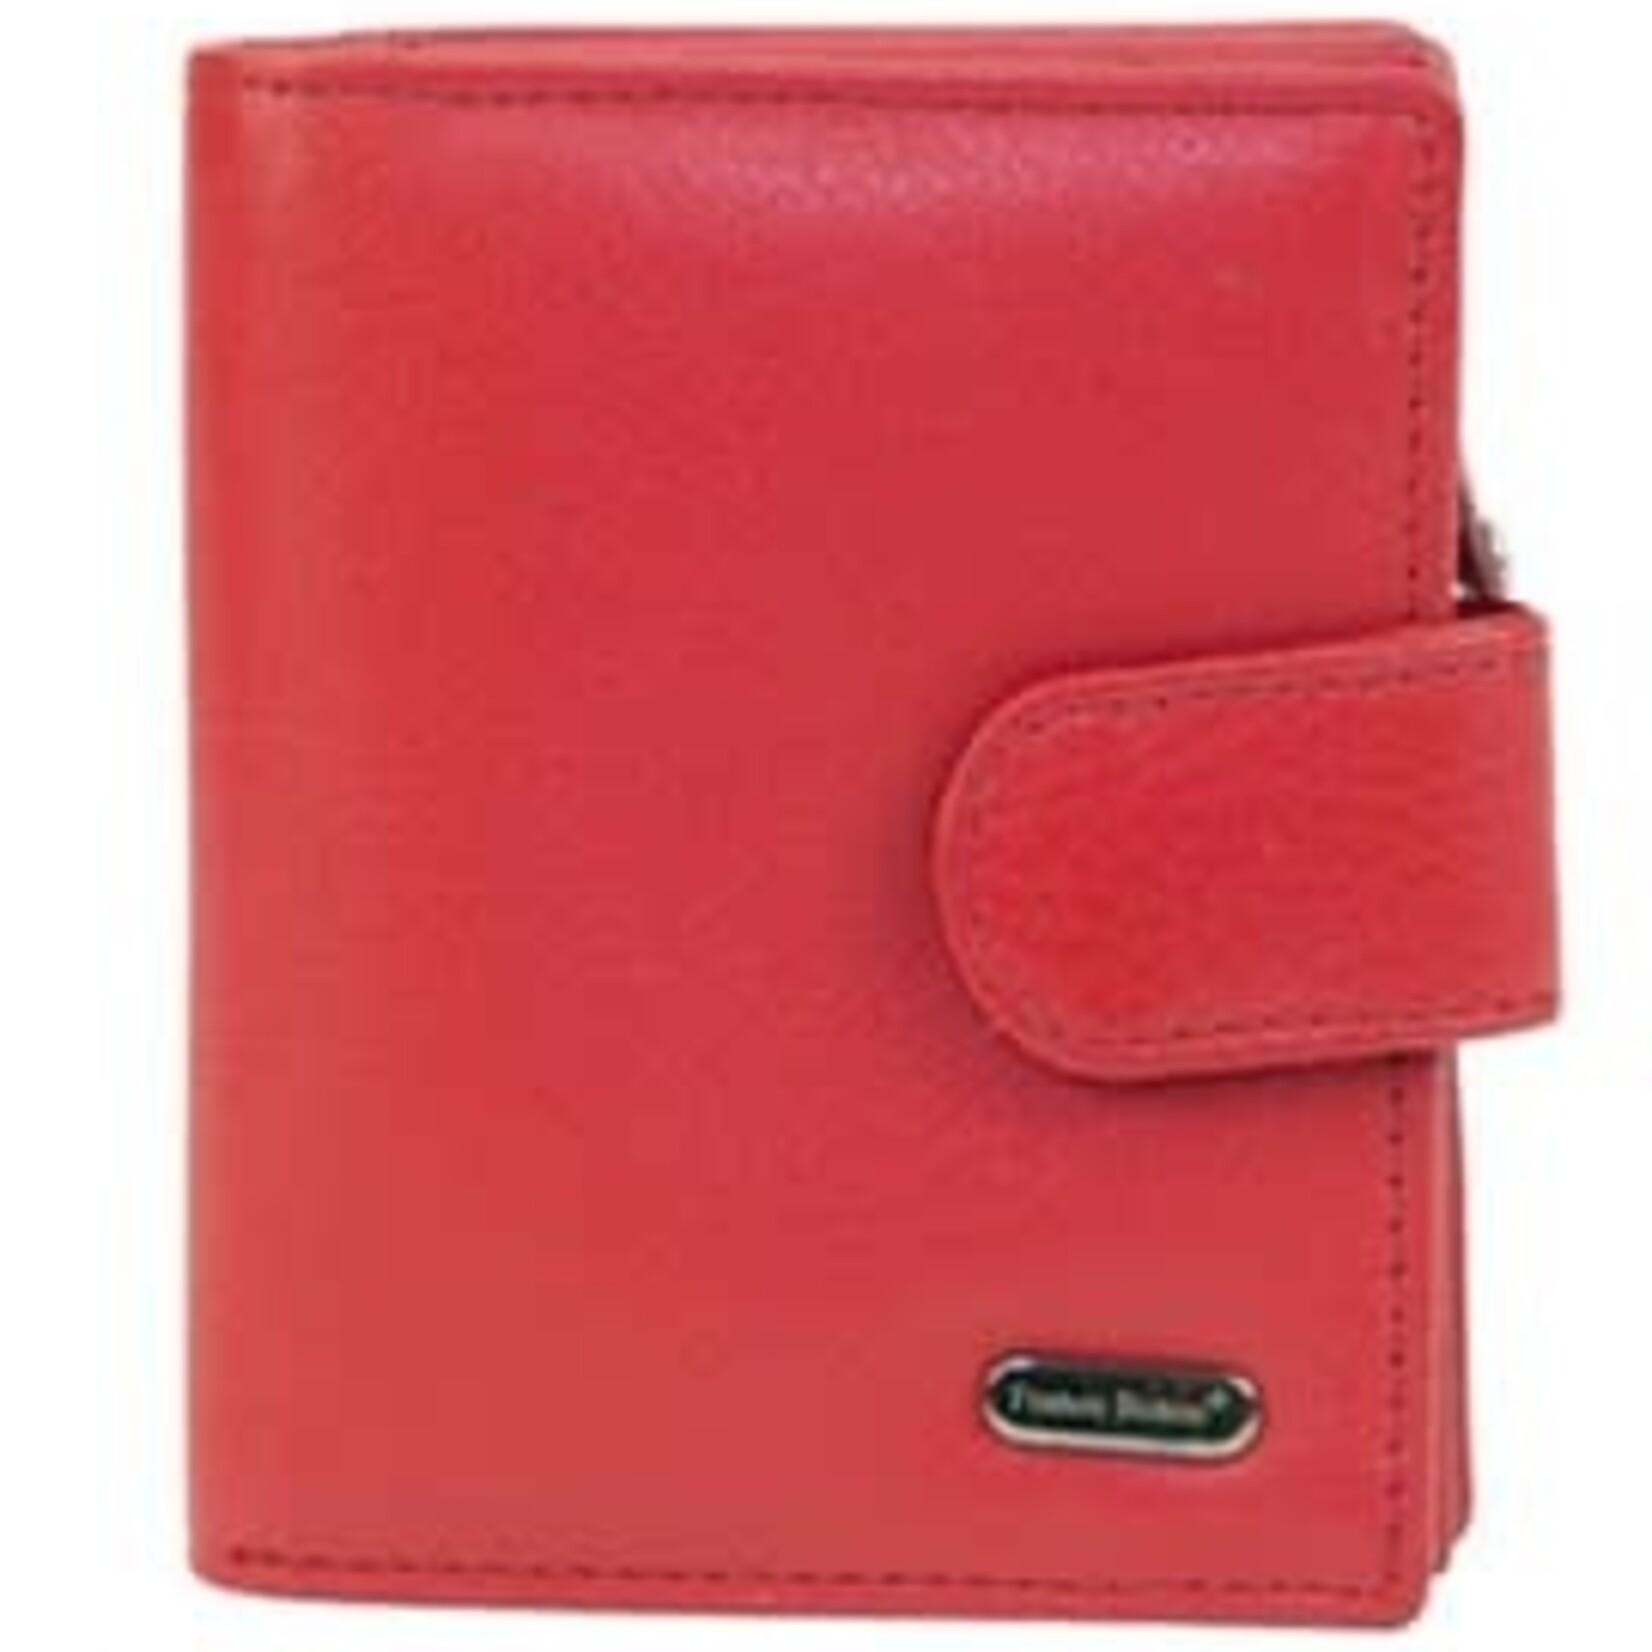 Franco Bonini Red Leather Medium Wallet